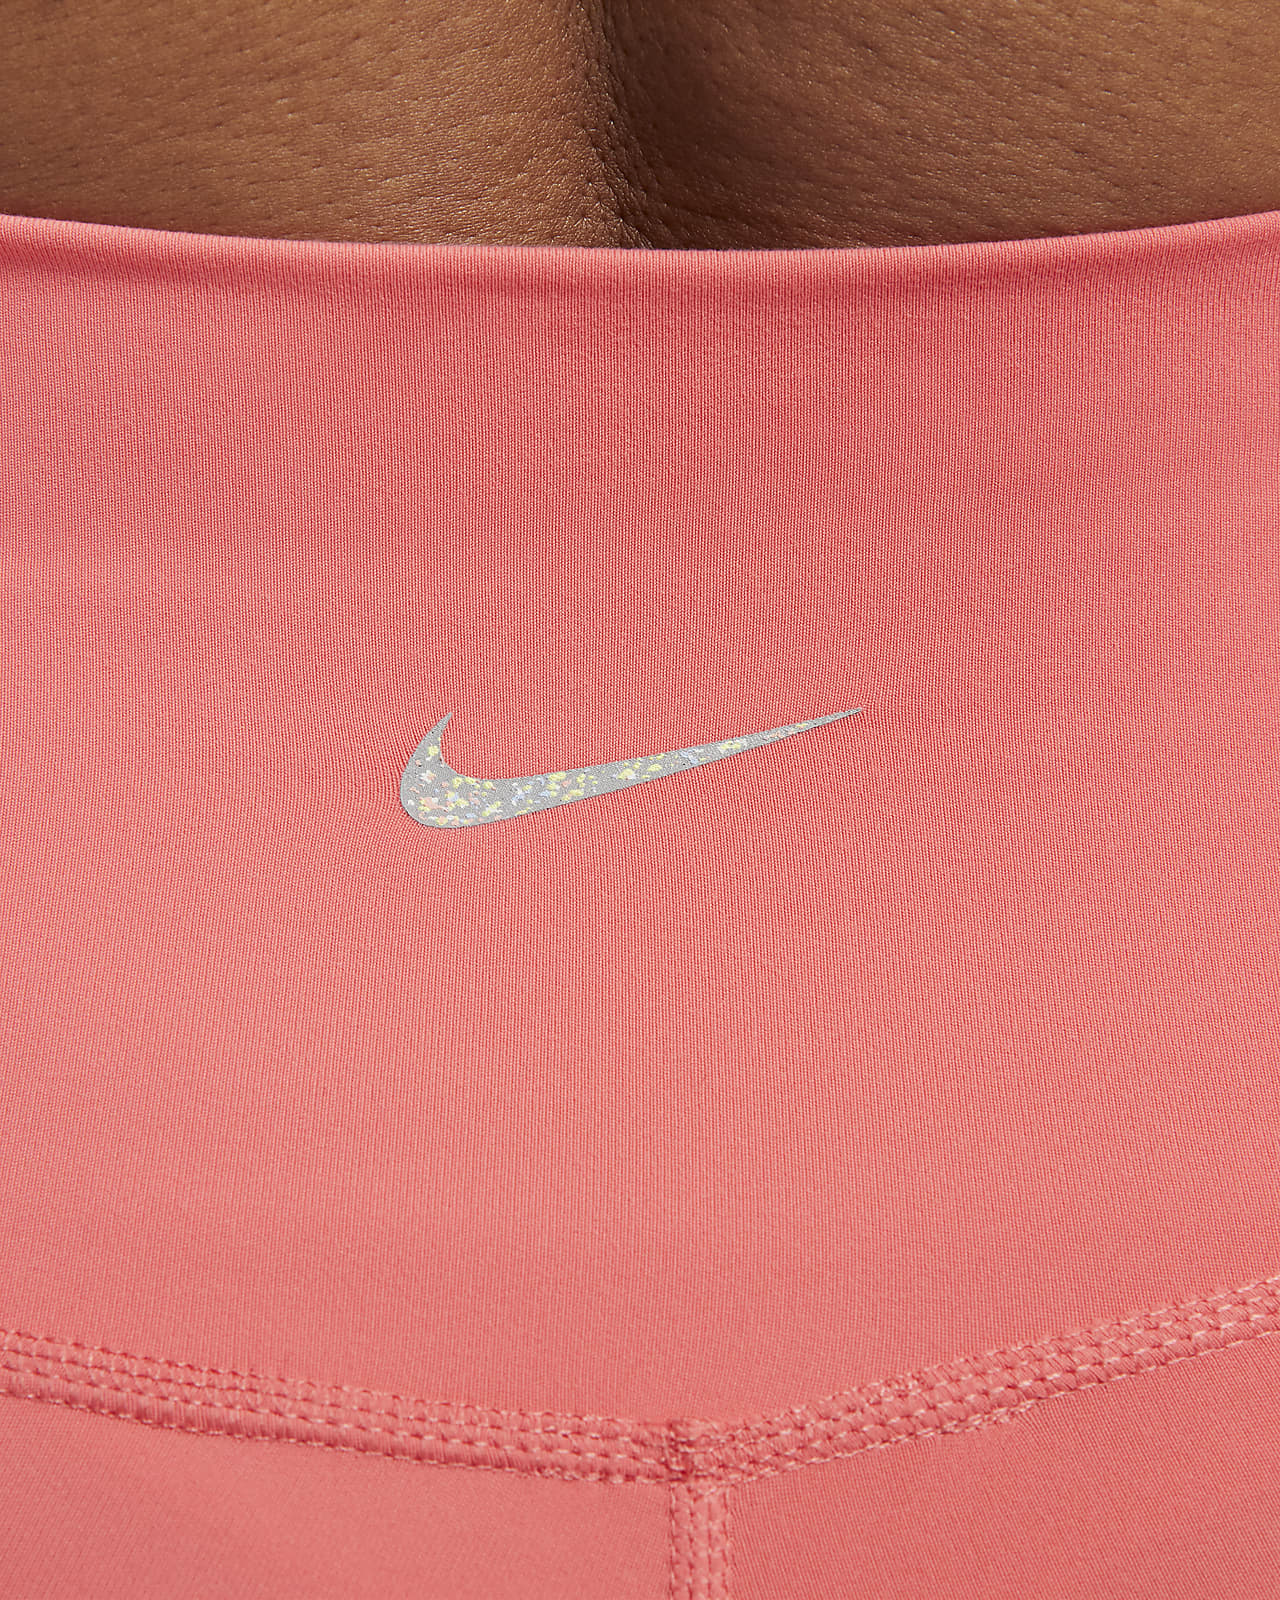 Nike Yoga Women's High-Waisted 7 Shorts Dynamic Berry Small